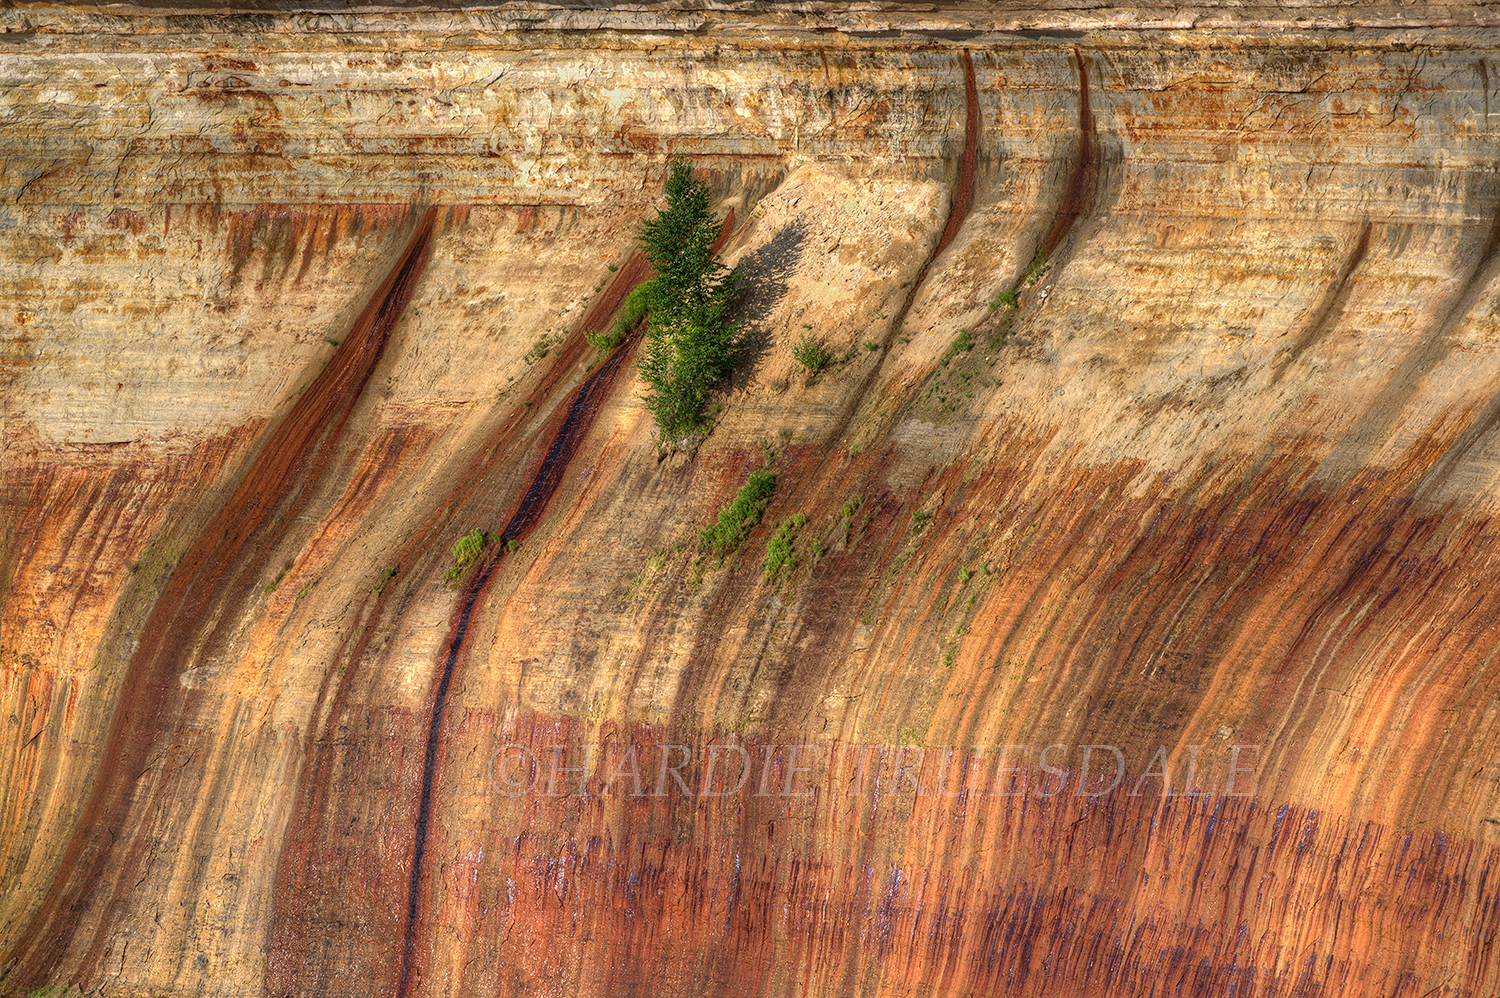  MI#040 "Tree and Cliff, Pictured Rocks Nat Lakeshore, Lake Superior" 